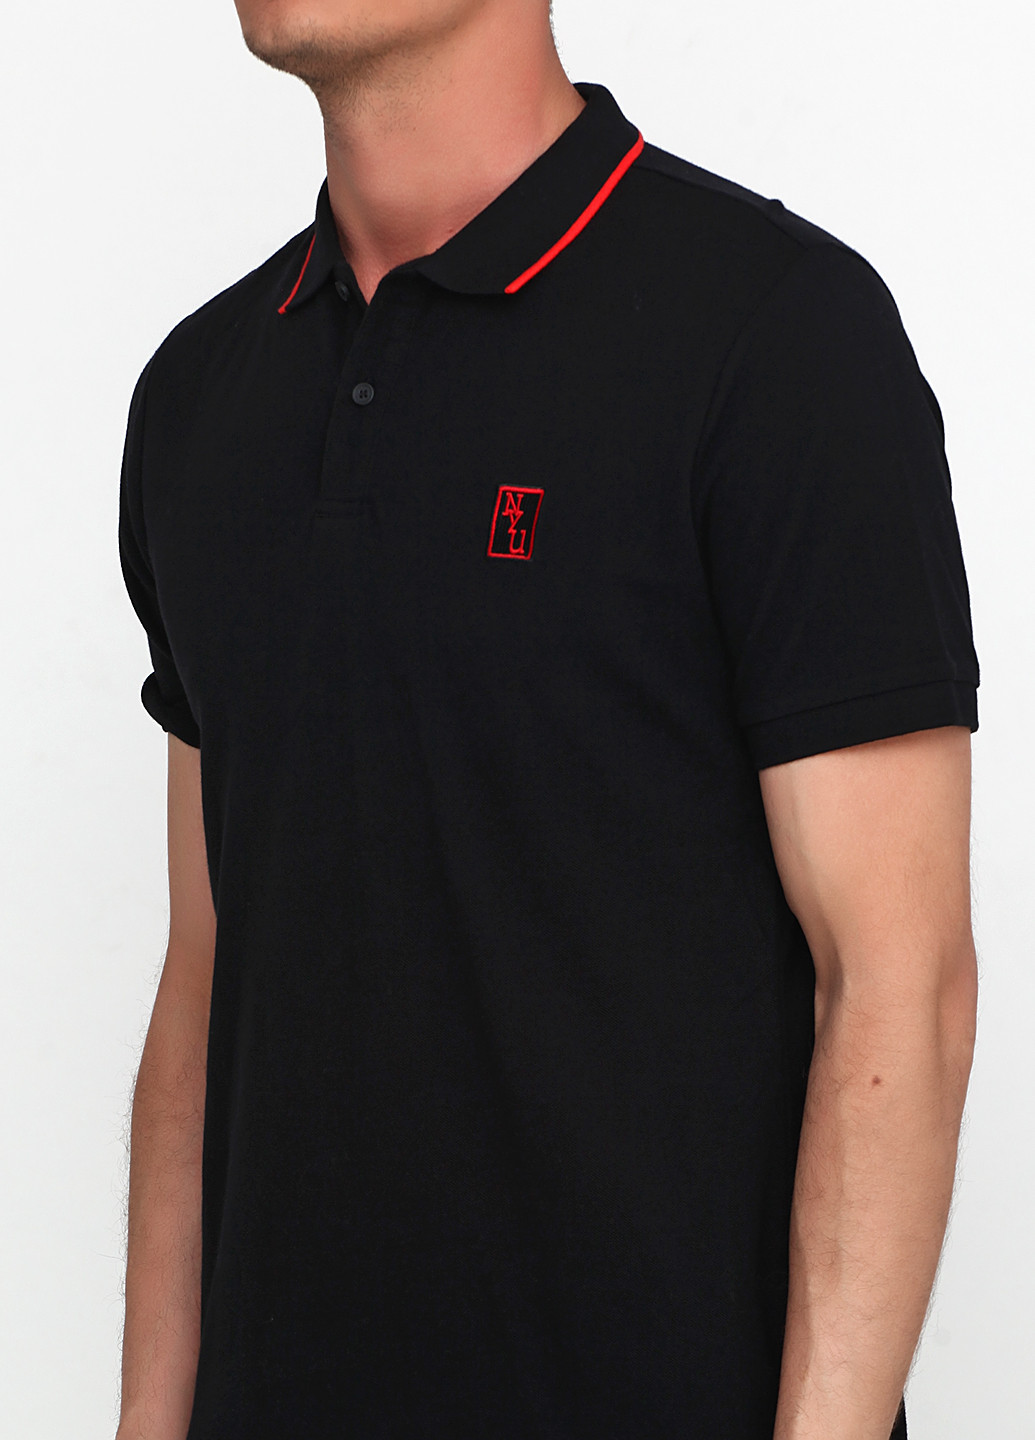 Черная футболка-поло для мужчин H&M с логотипом